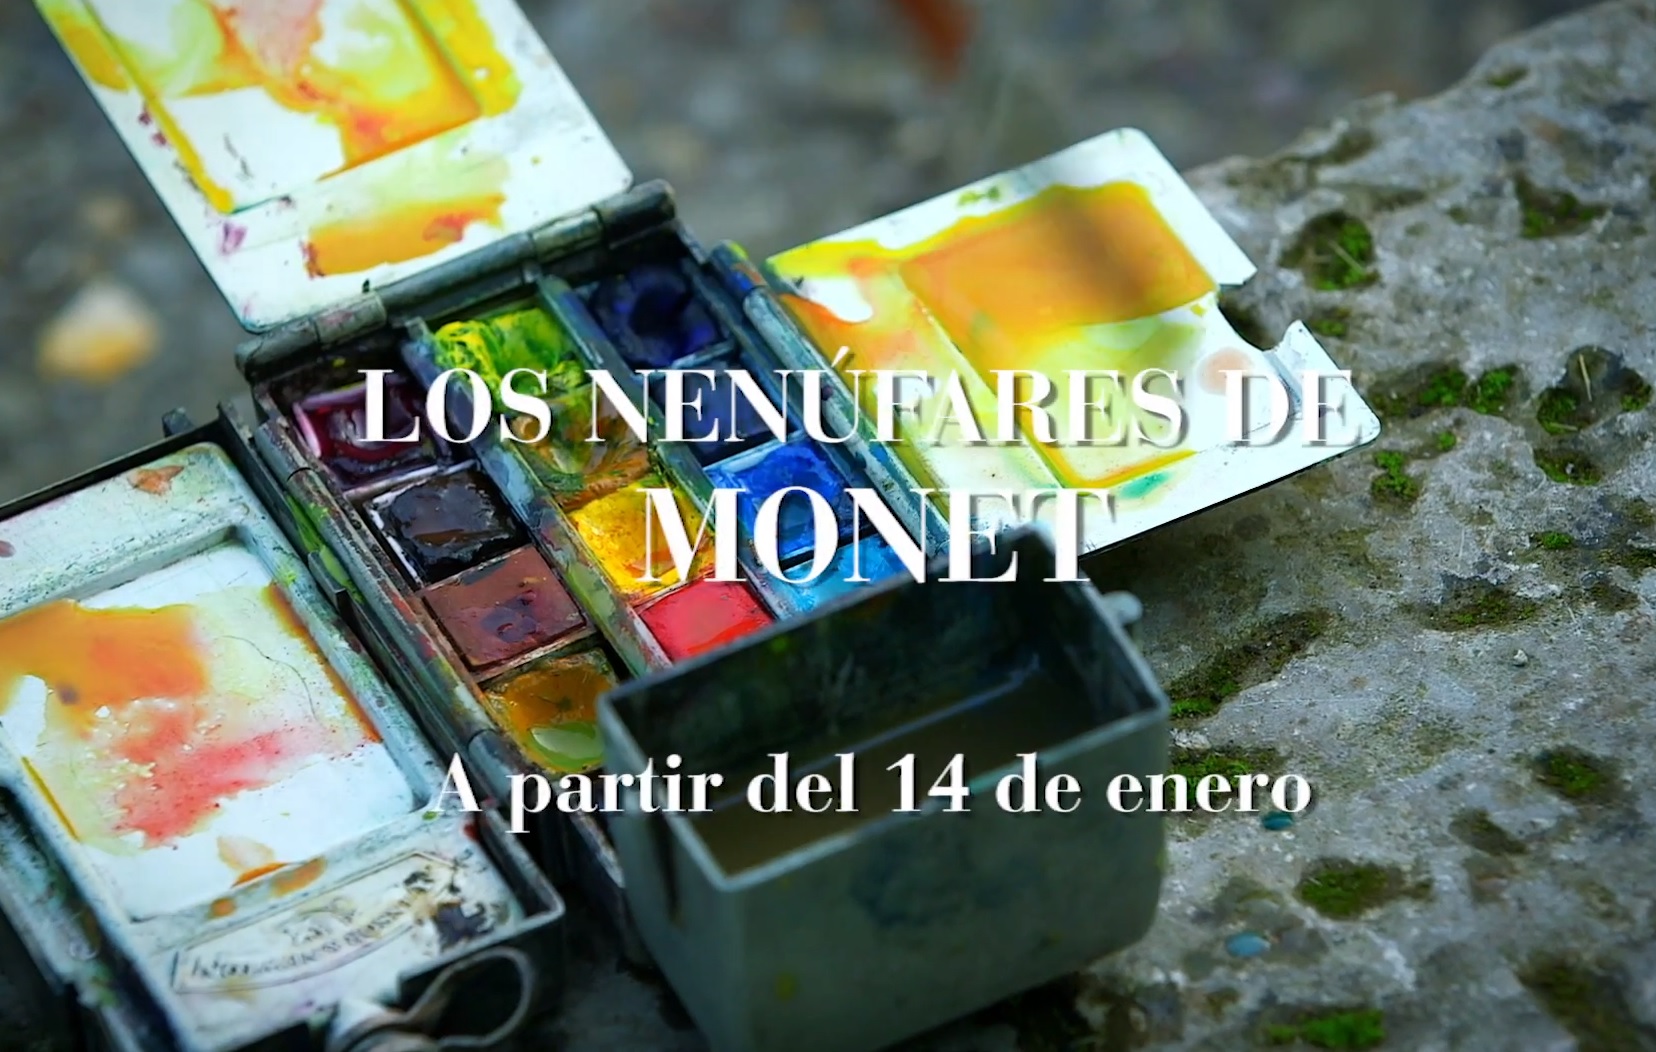 Foto Monet.jpg